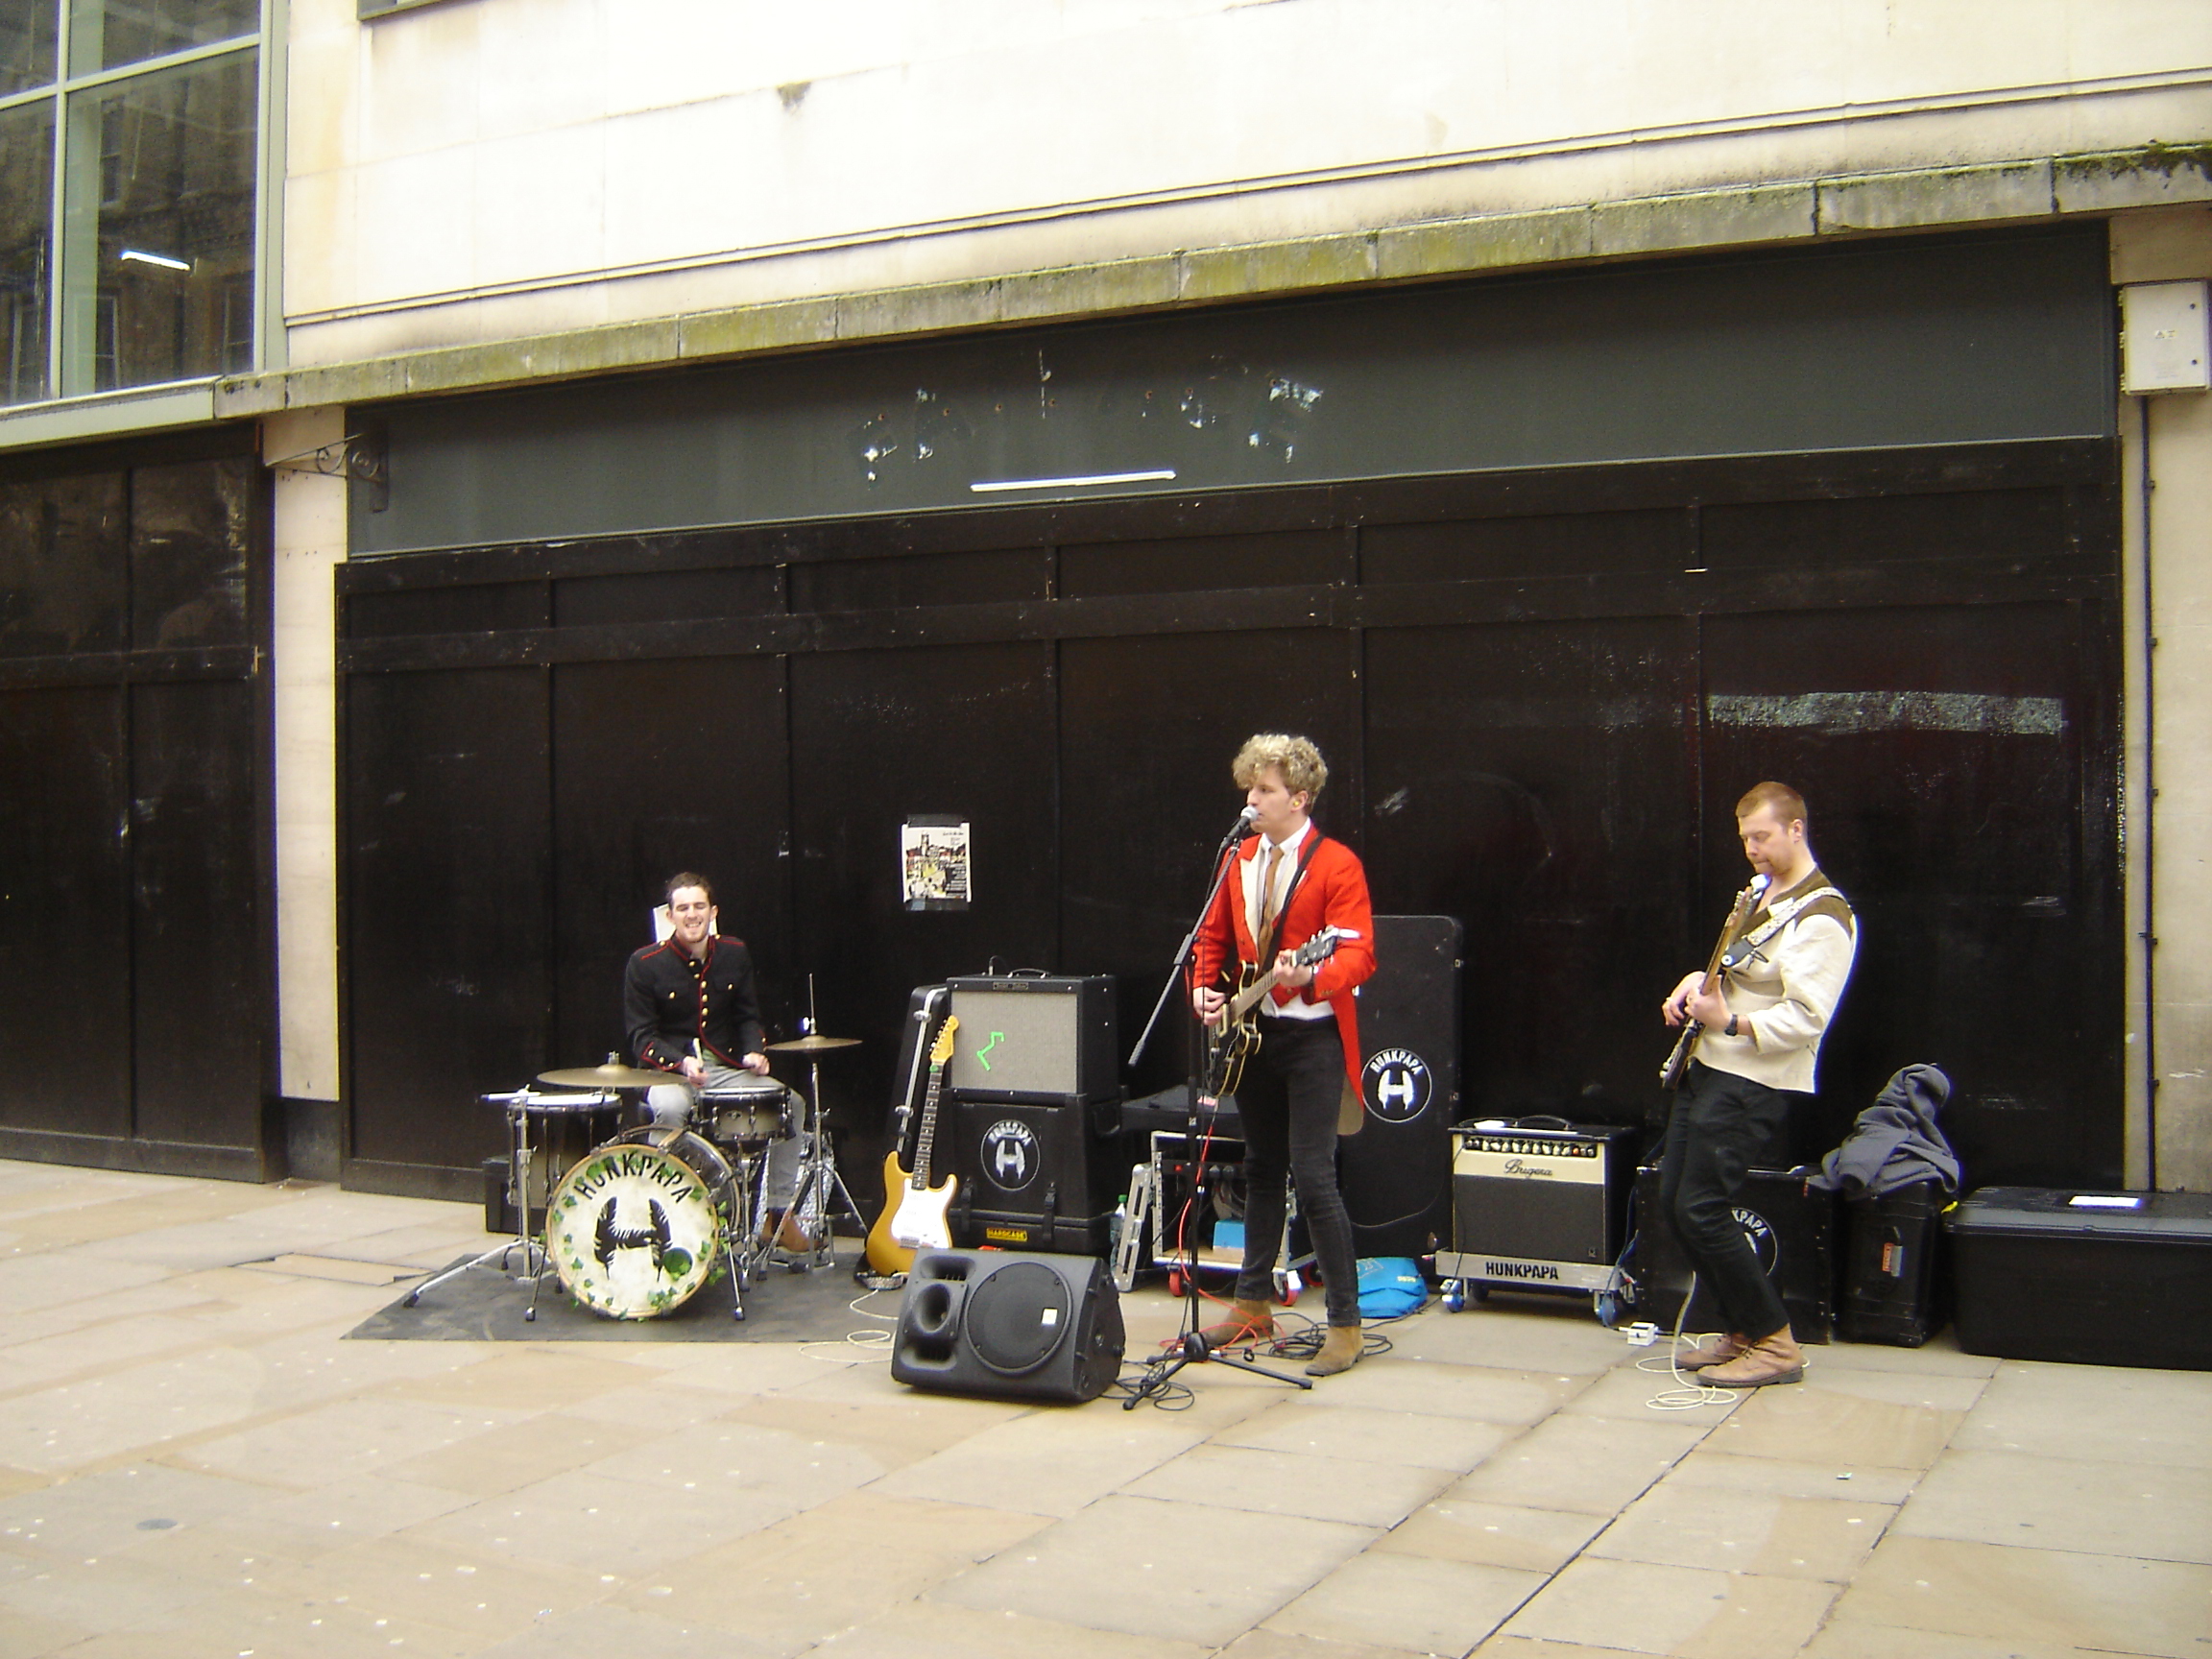 Hunkpapa playing in Cornmarket Street, Oxford